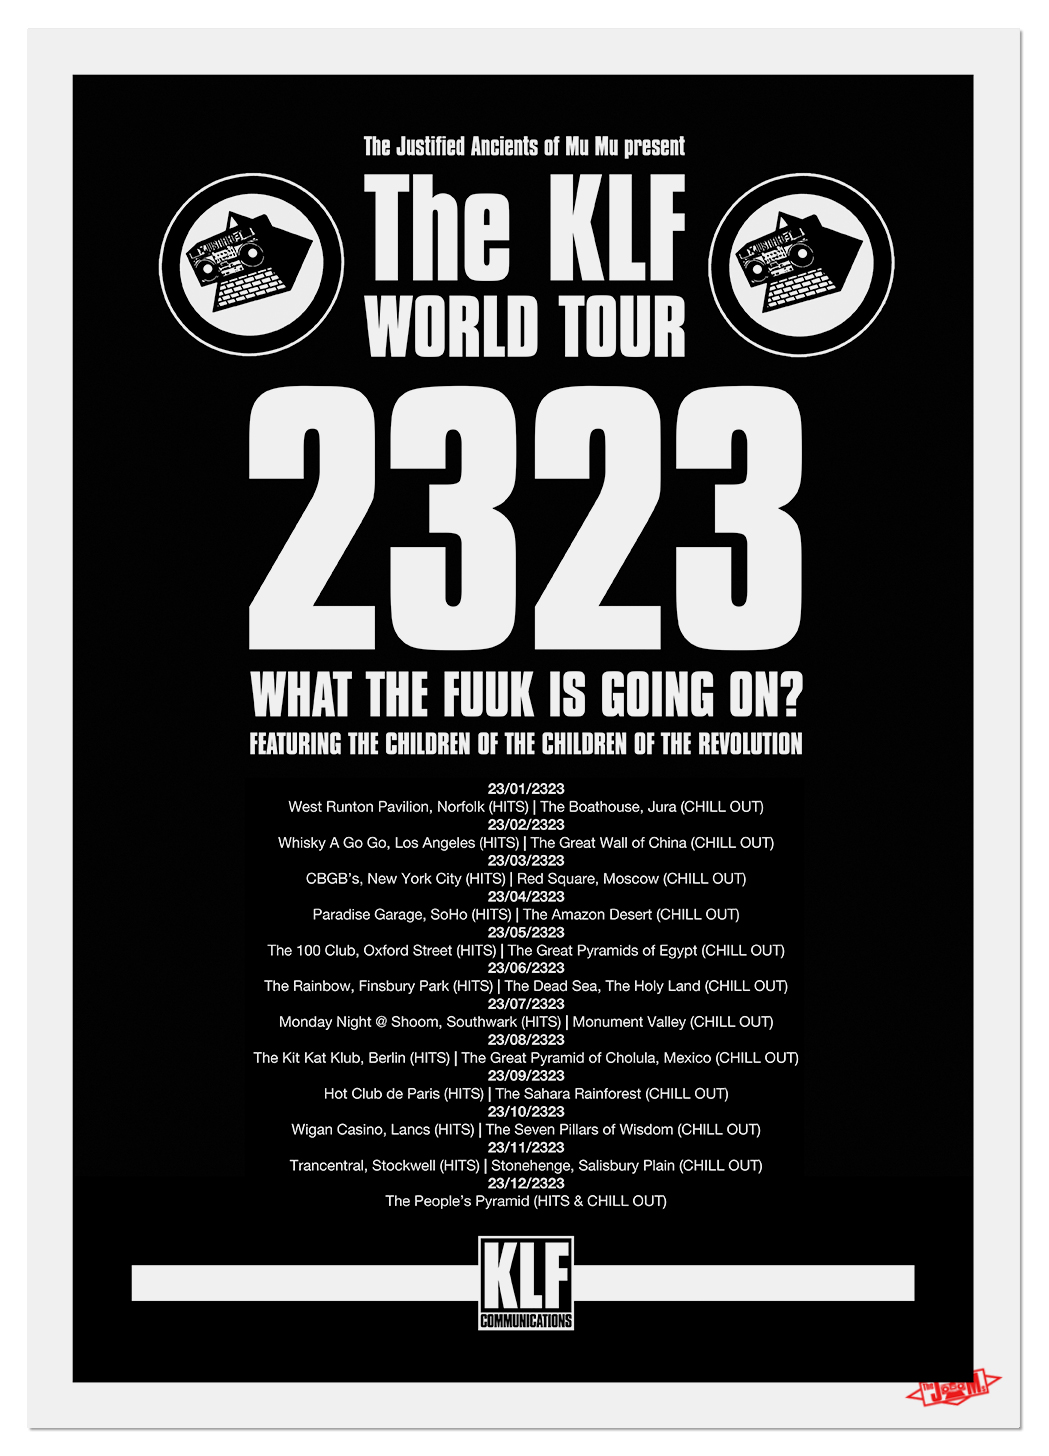 The KLF 2323 Tour Poster NEW white on black